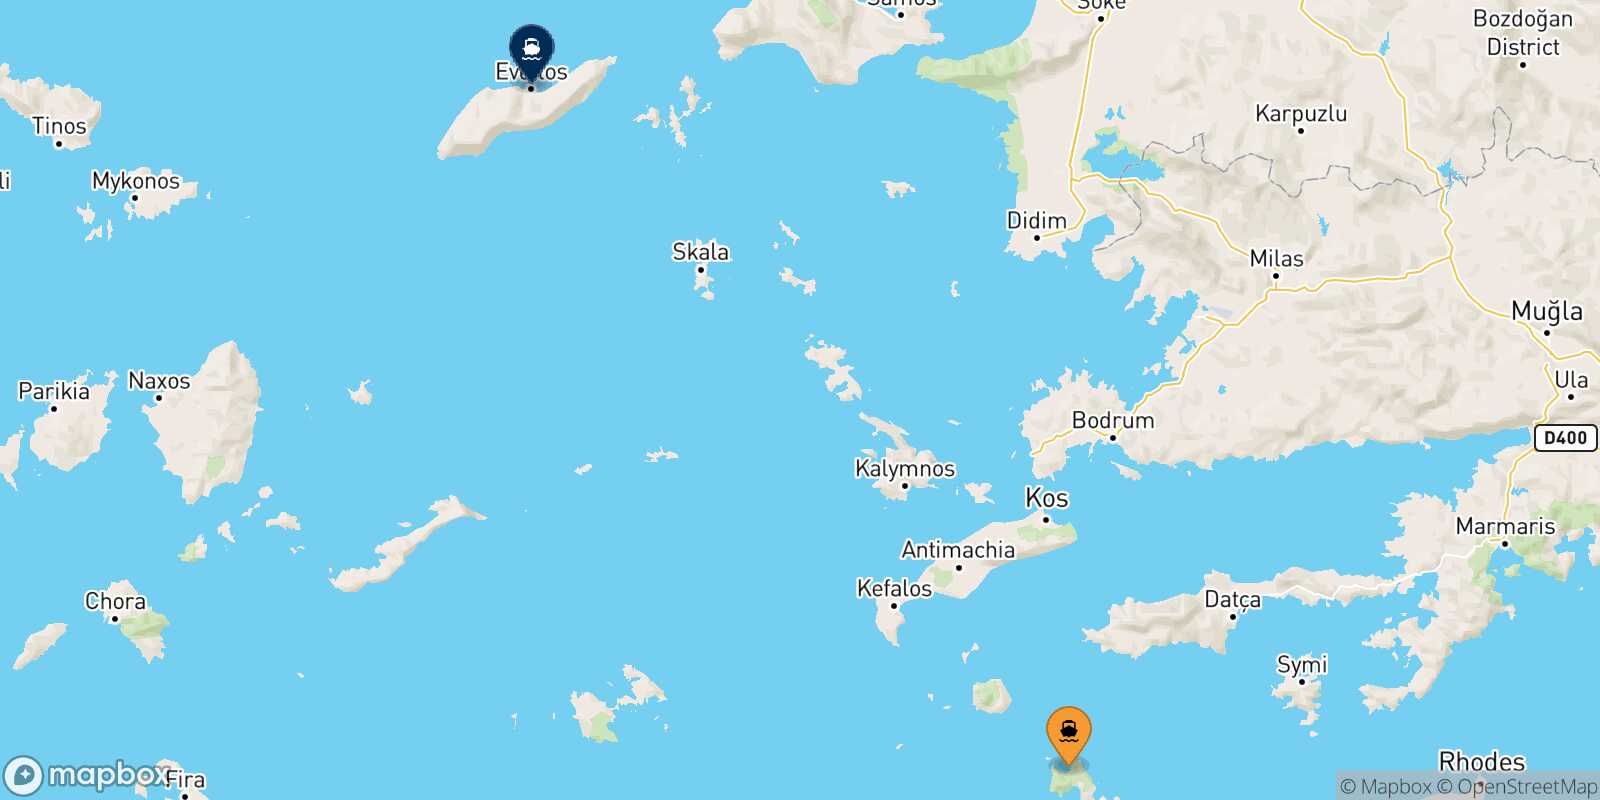 Tilos Evdilos (Ikaria) route map